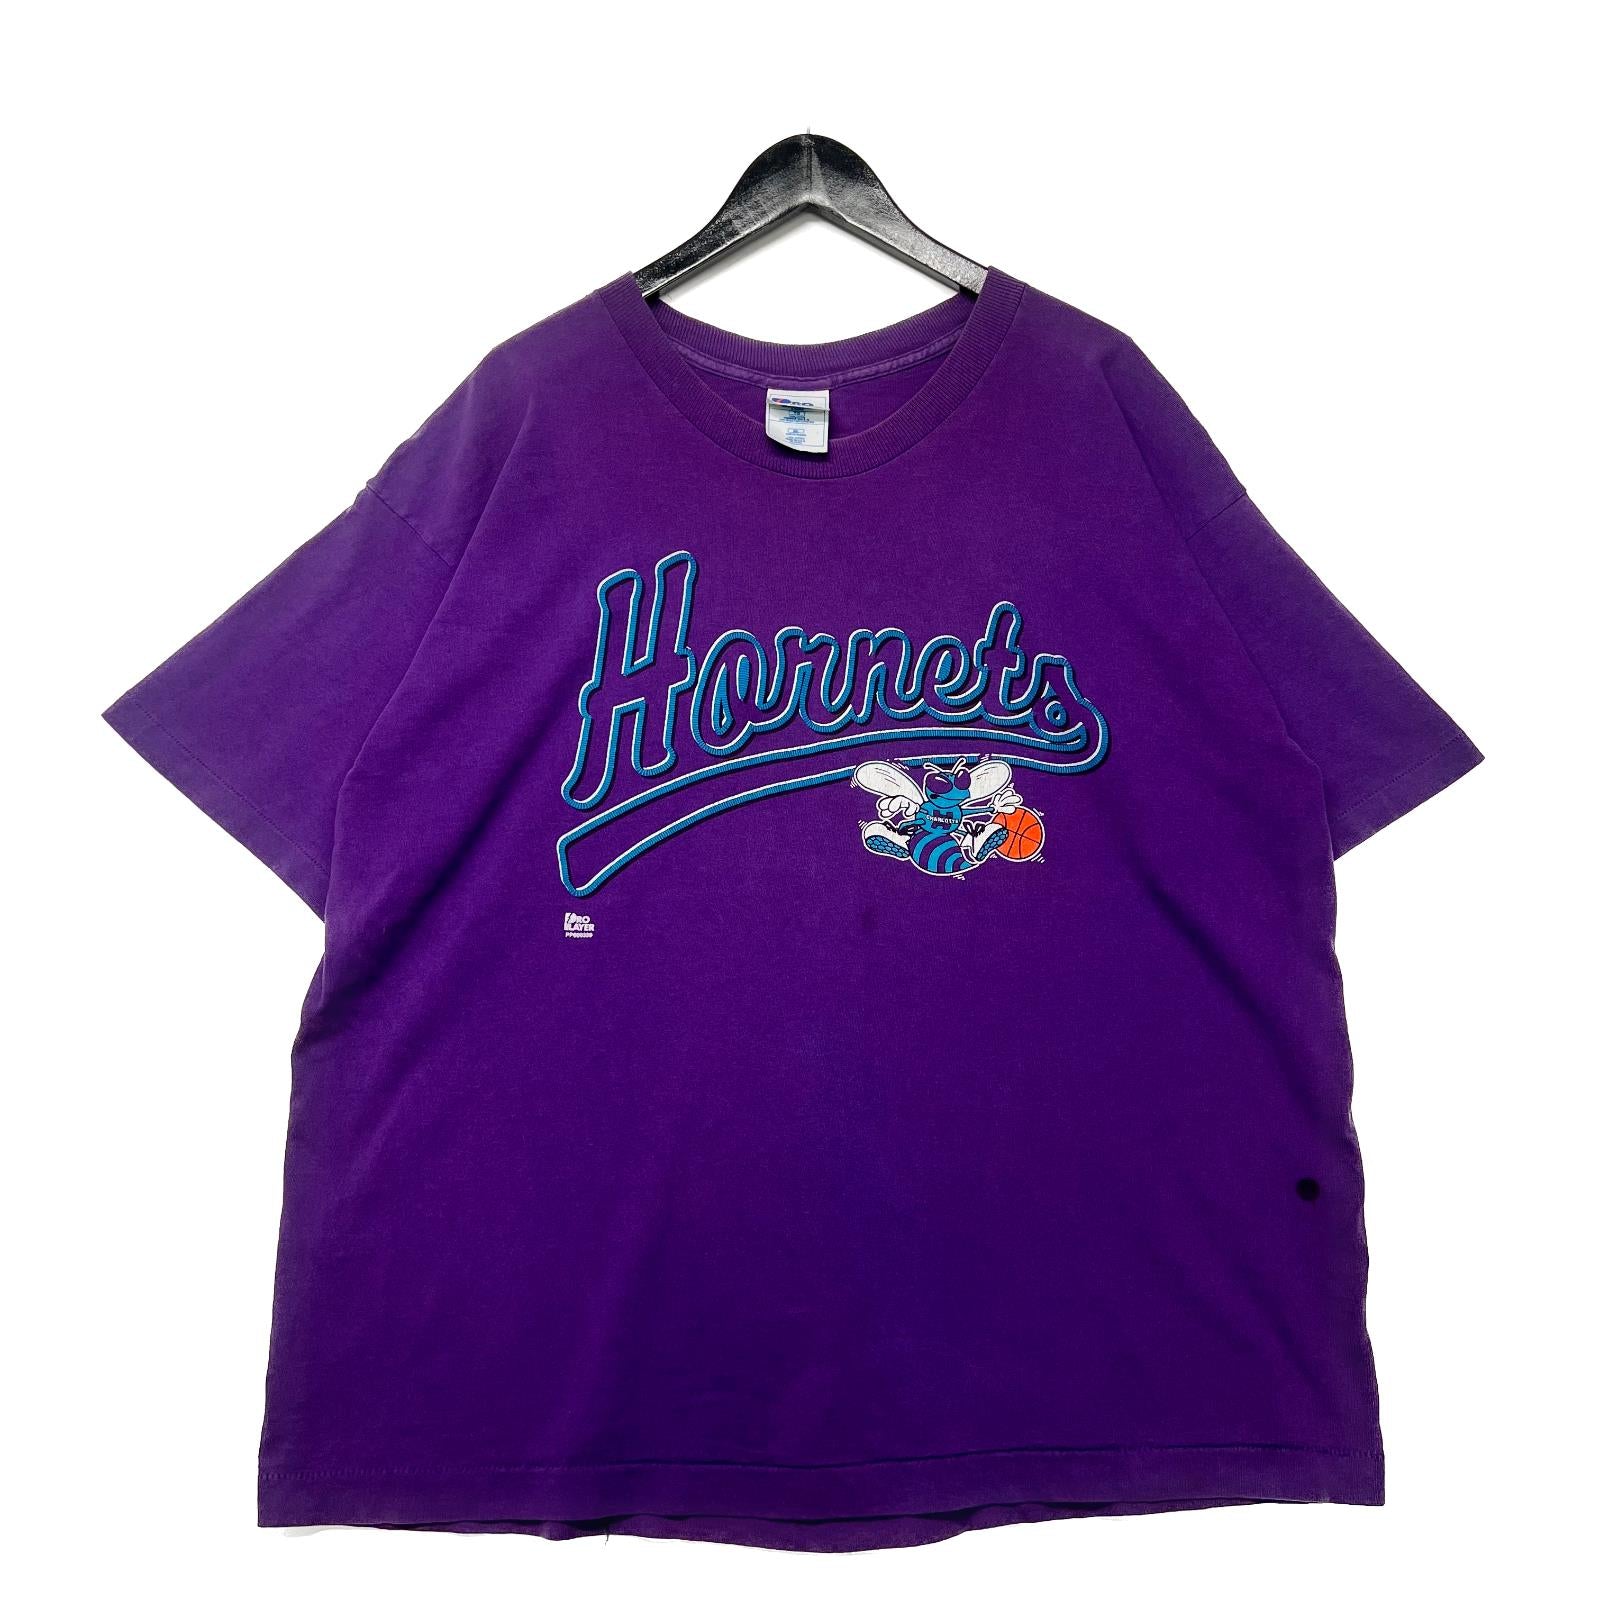 Vintage 90s NBA Charlotte Hornets Purple T-shirt Size XL USA Pro Player